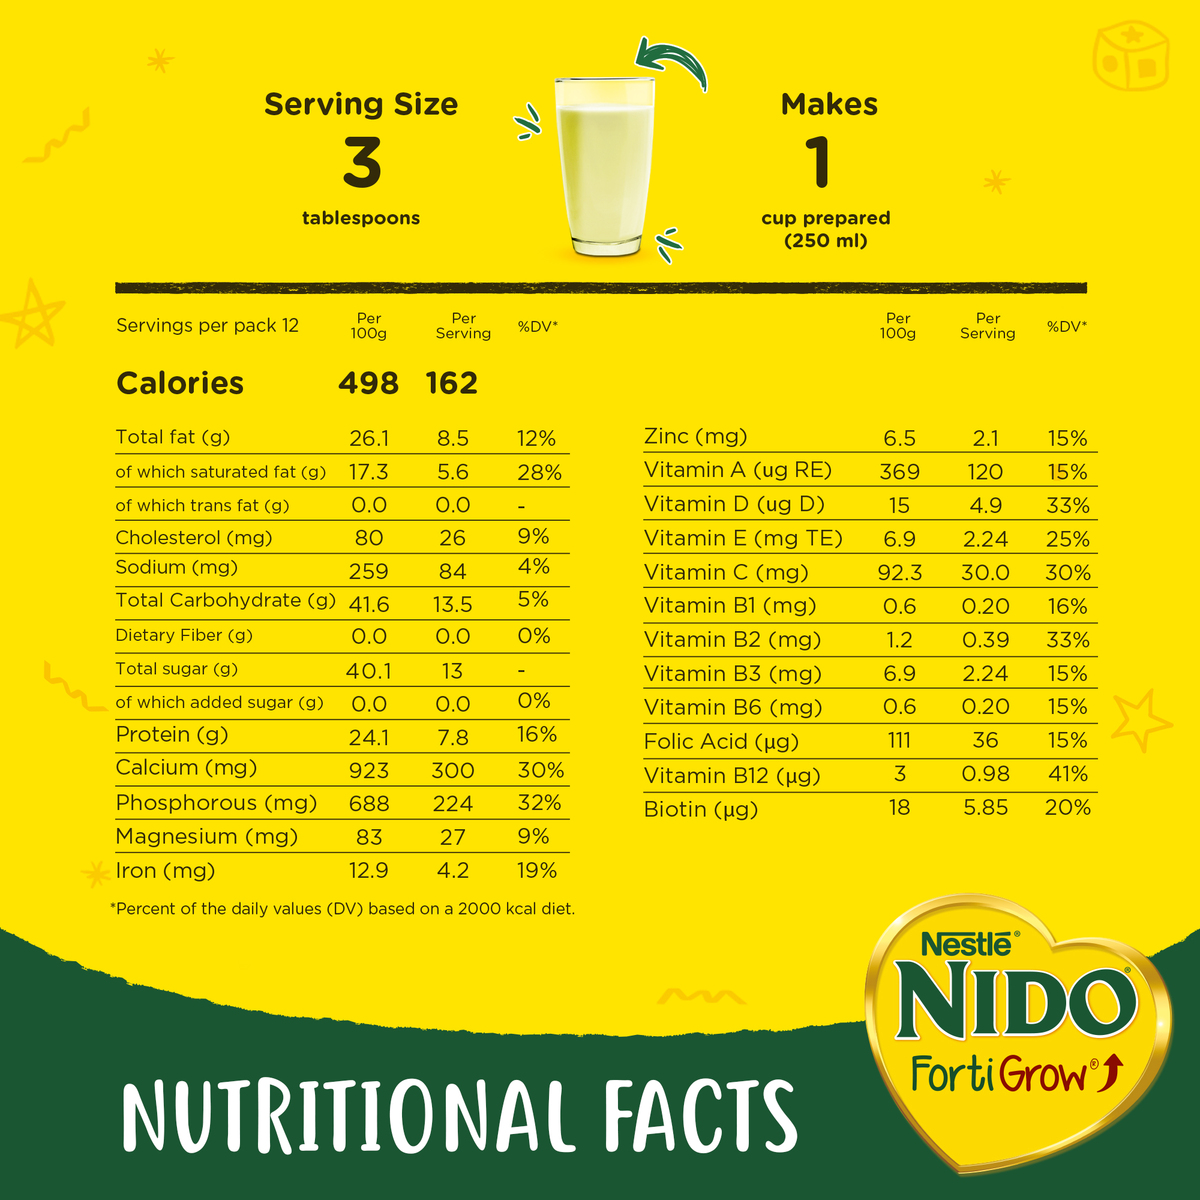 Nestle Nido Fortified Milk Powder 400g